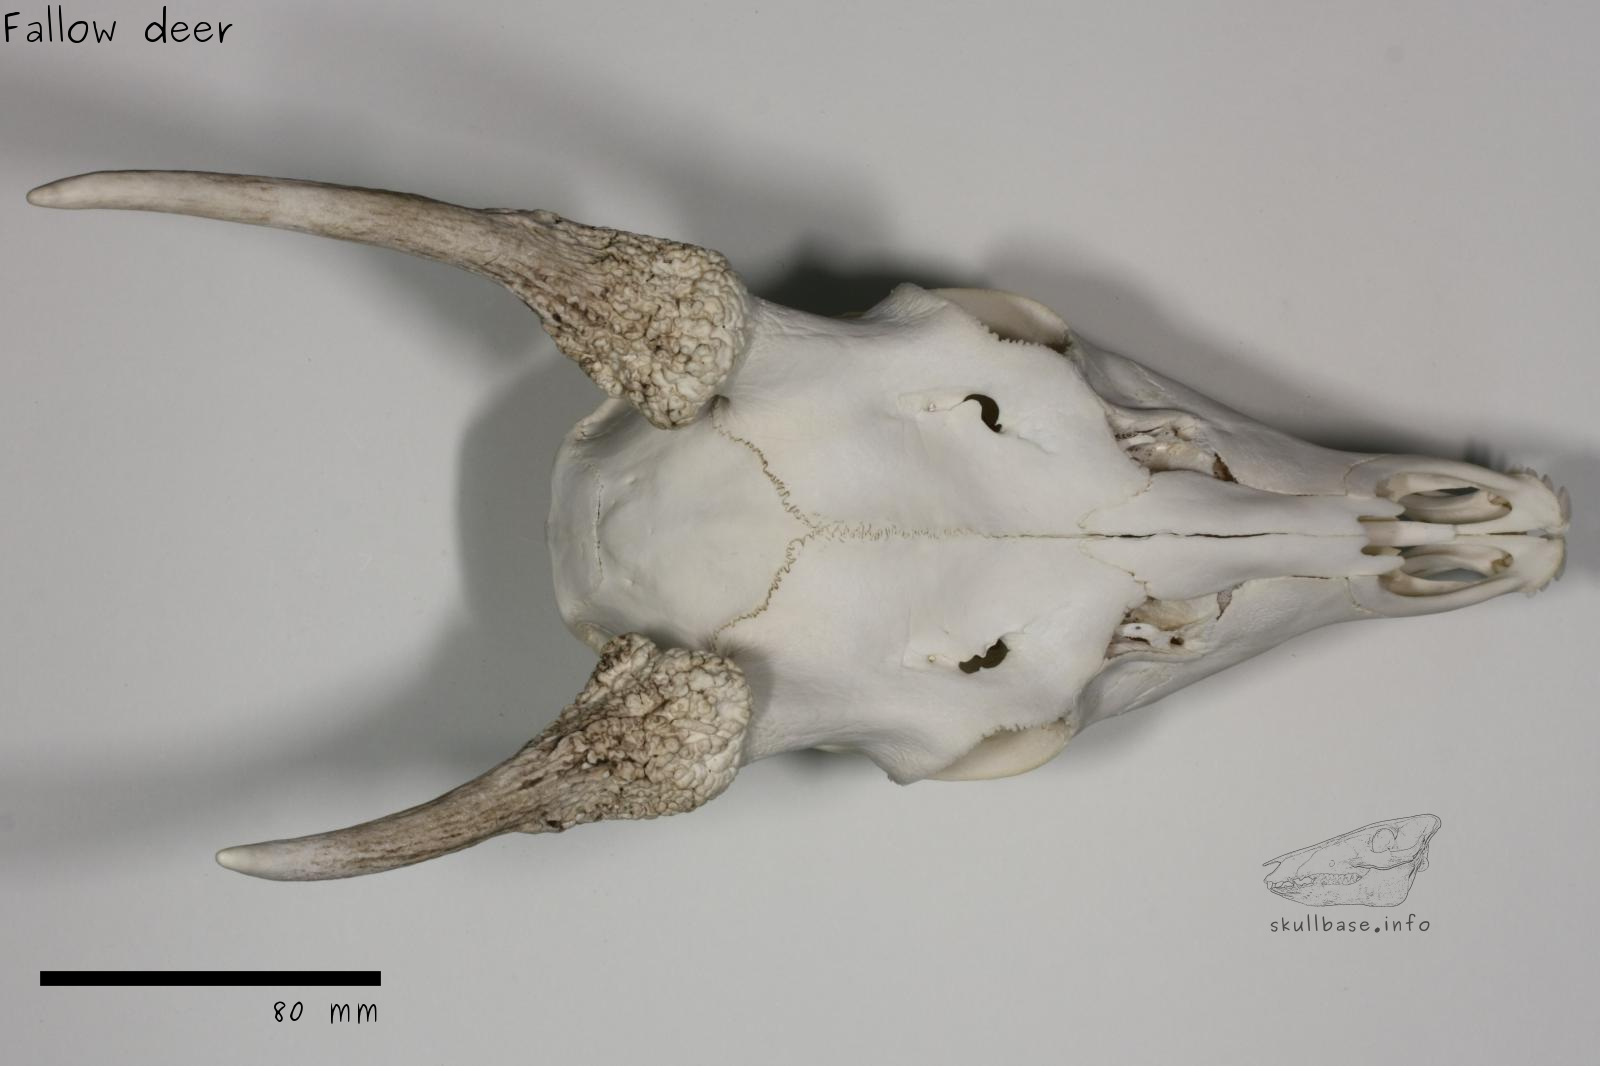 Fallow deer (Dama dama) skull dorsal view